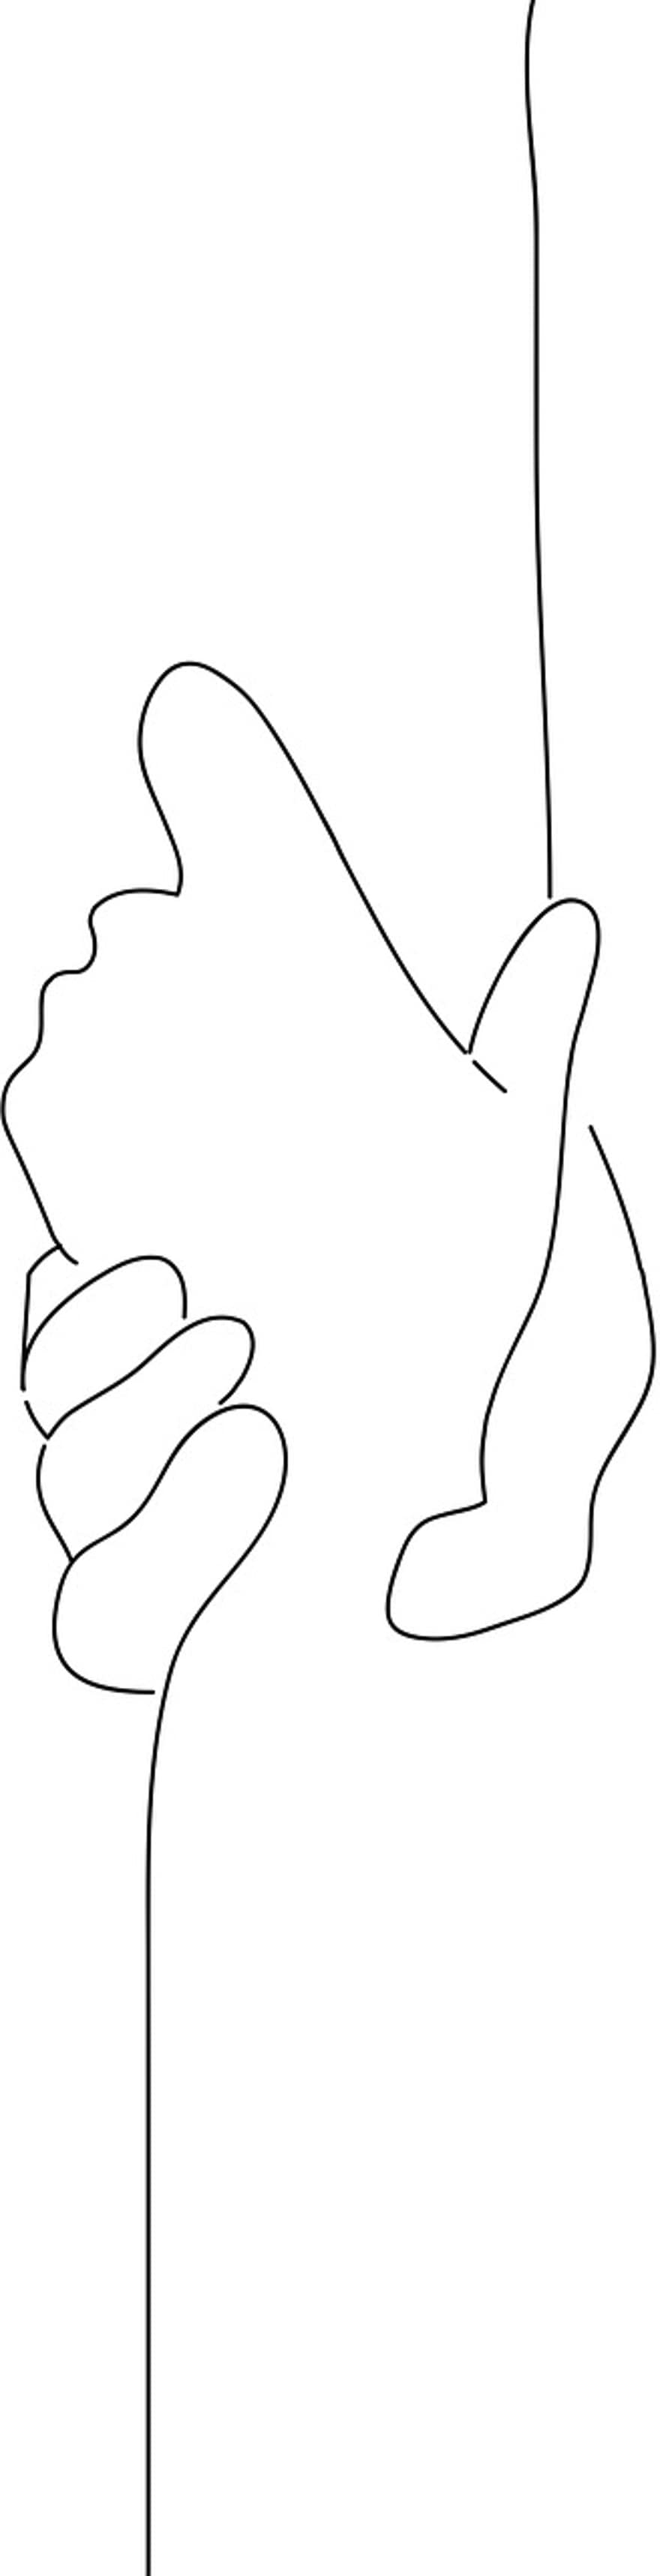 Holding Hands, Together, Support, Line Art, illustration, vector, cartoon, silhouette, symbol, hand, design